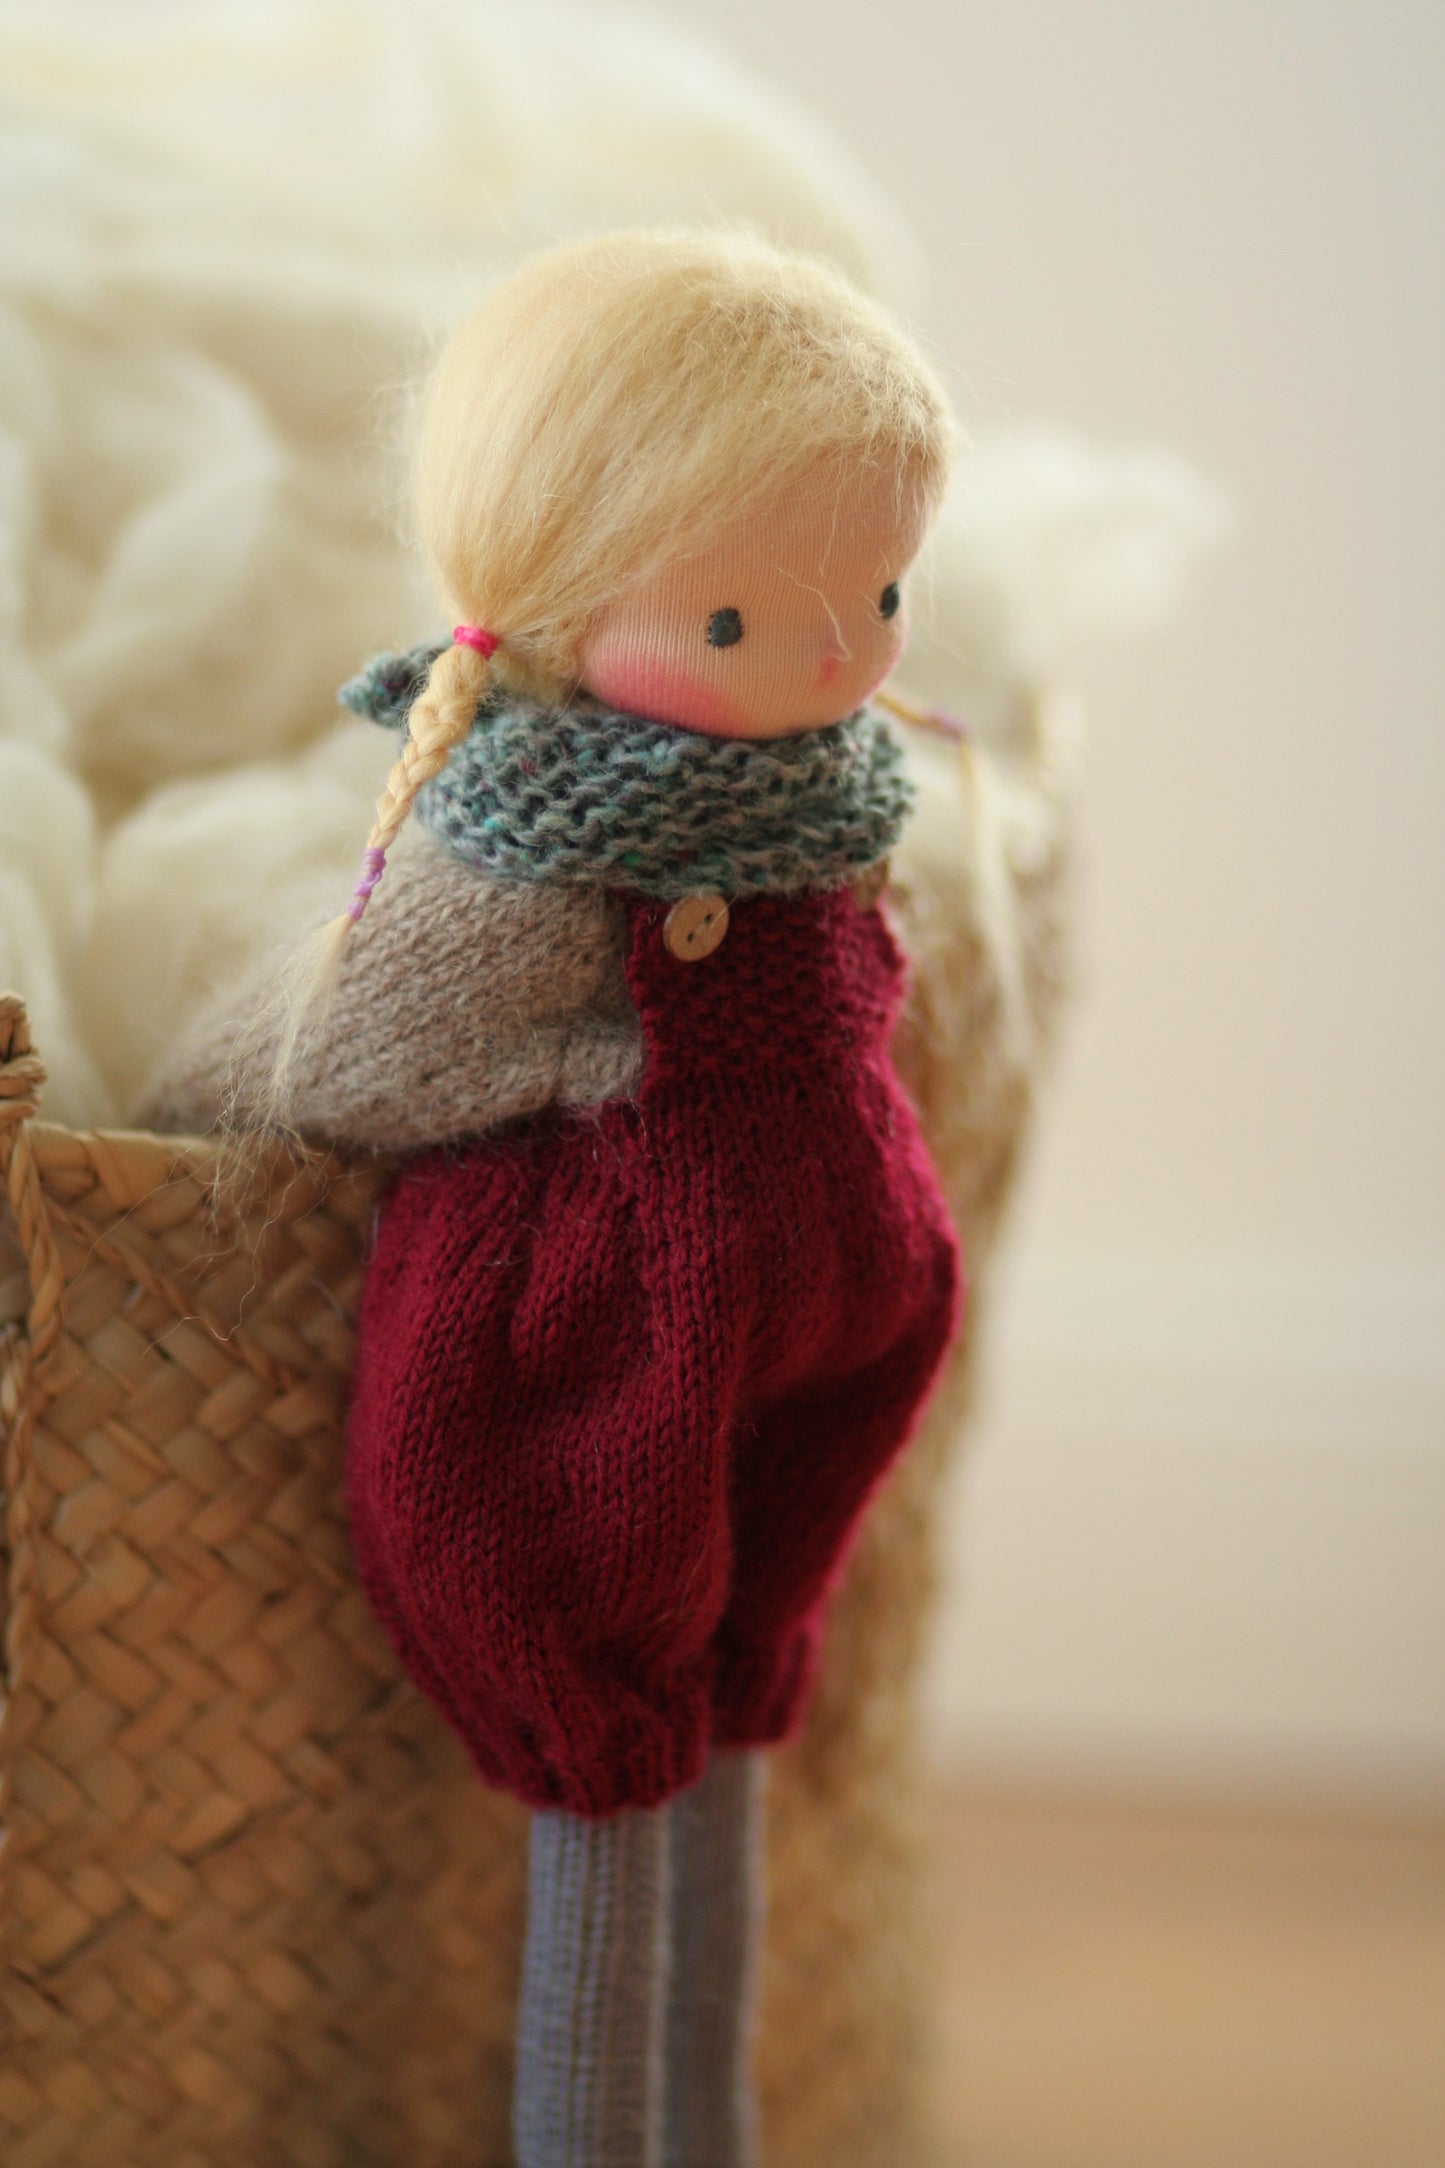 Fanni - Waldorf doll, Peperuda doll, knitted 14” doll, handmade doll, natural doll, art doll, puppen, rag doll